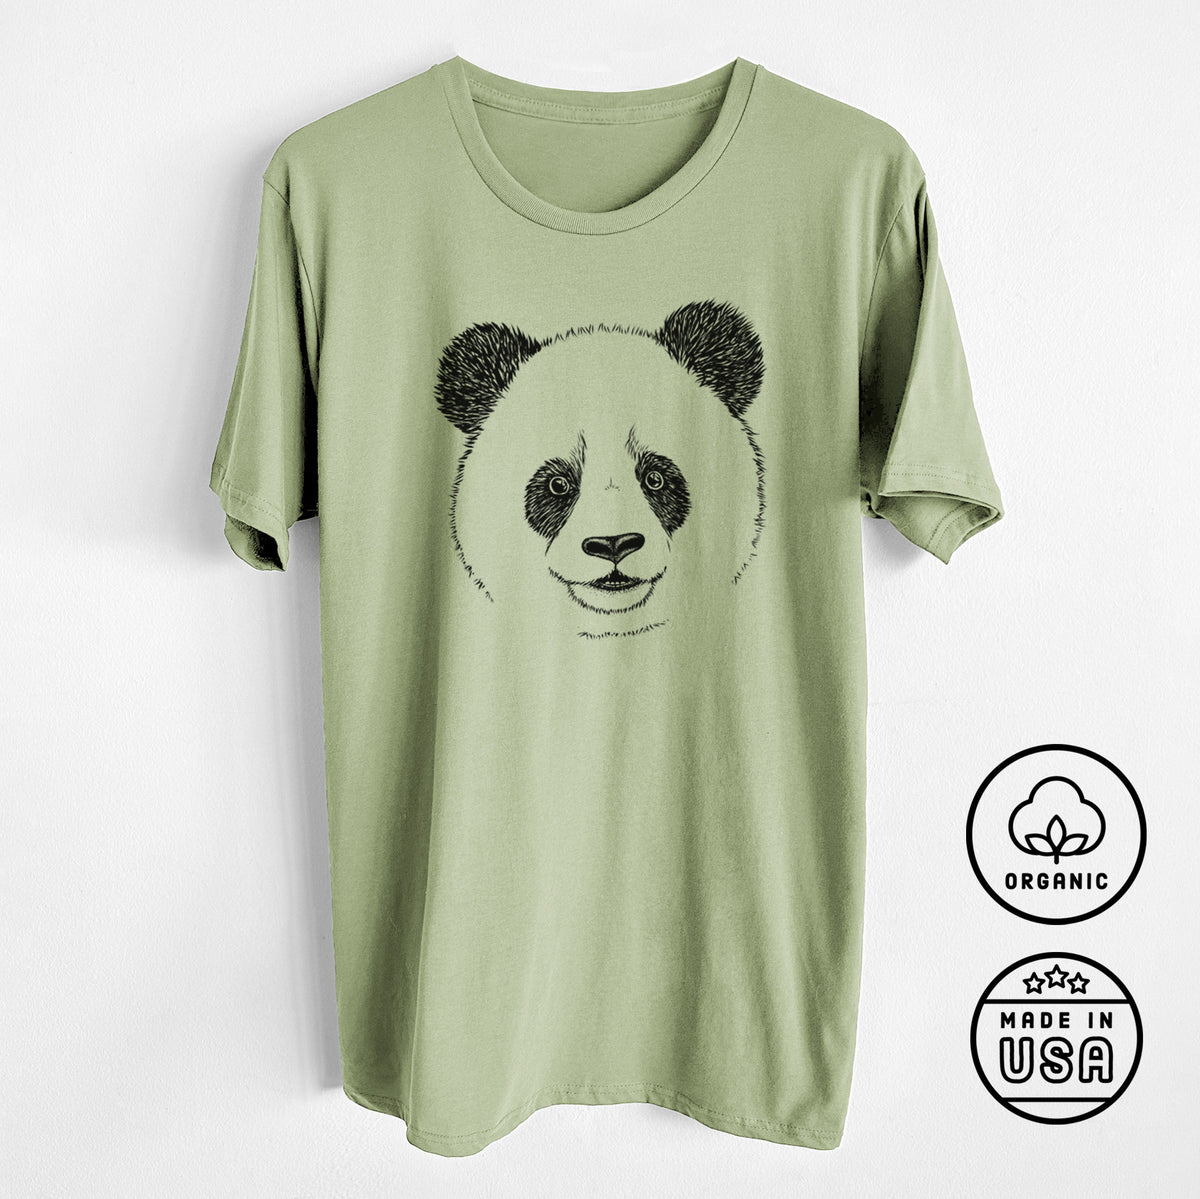 Giant Panda - Unisex Crewneck - Made in USA - 100% Organic Cotton